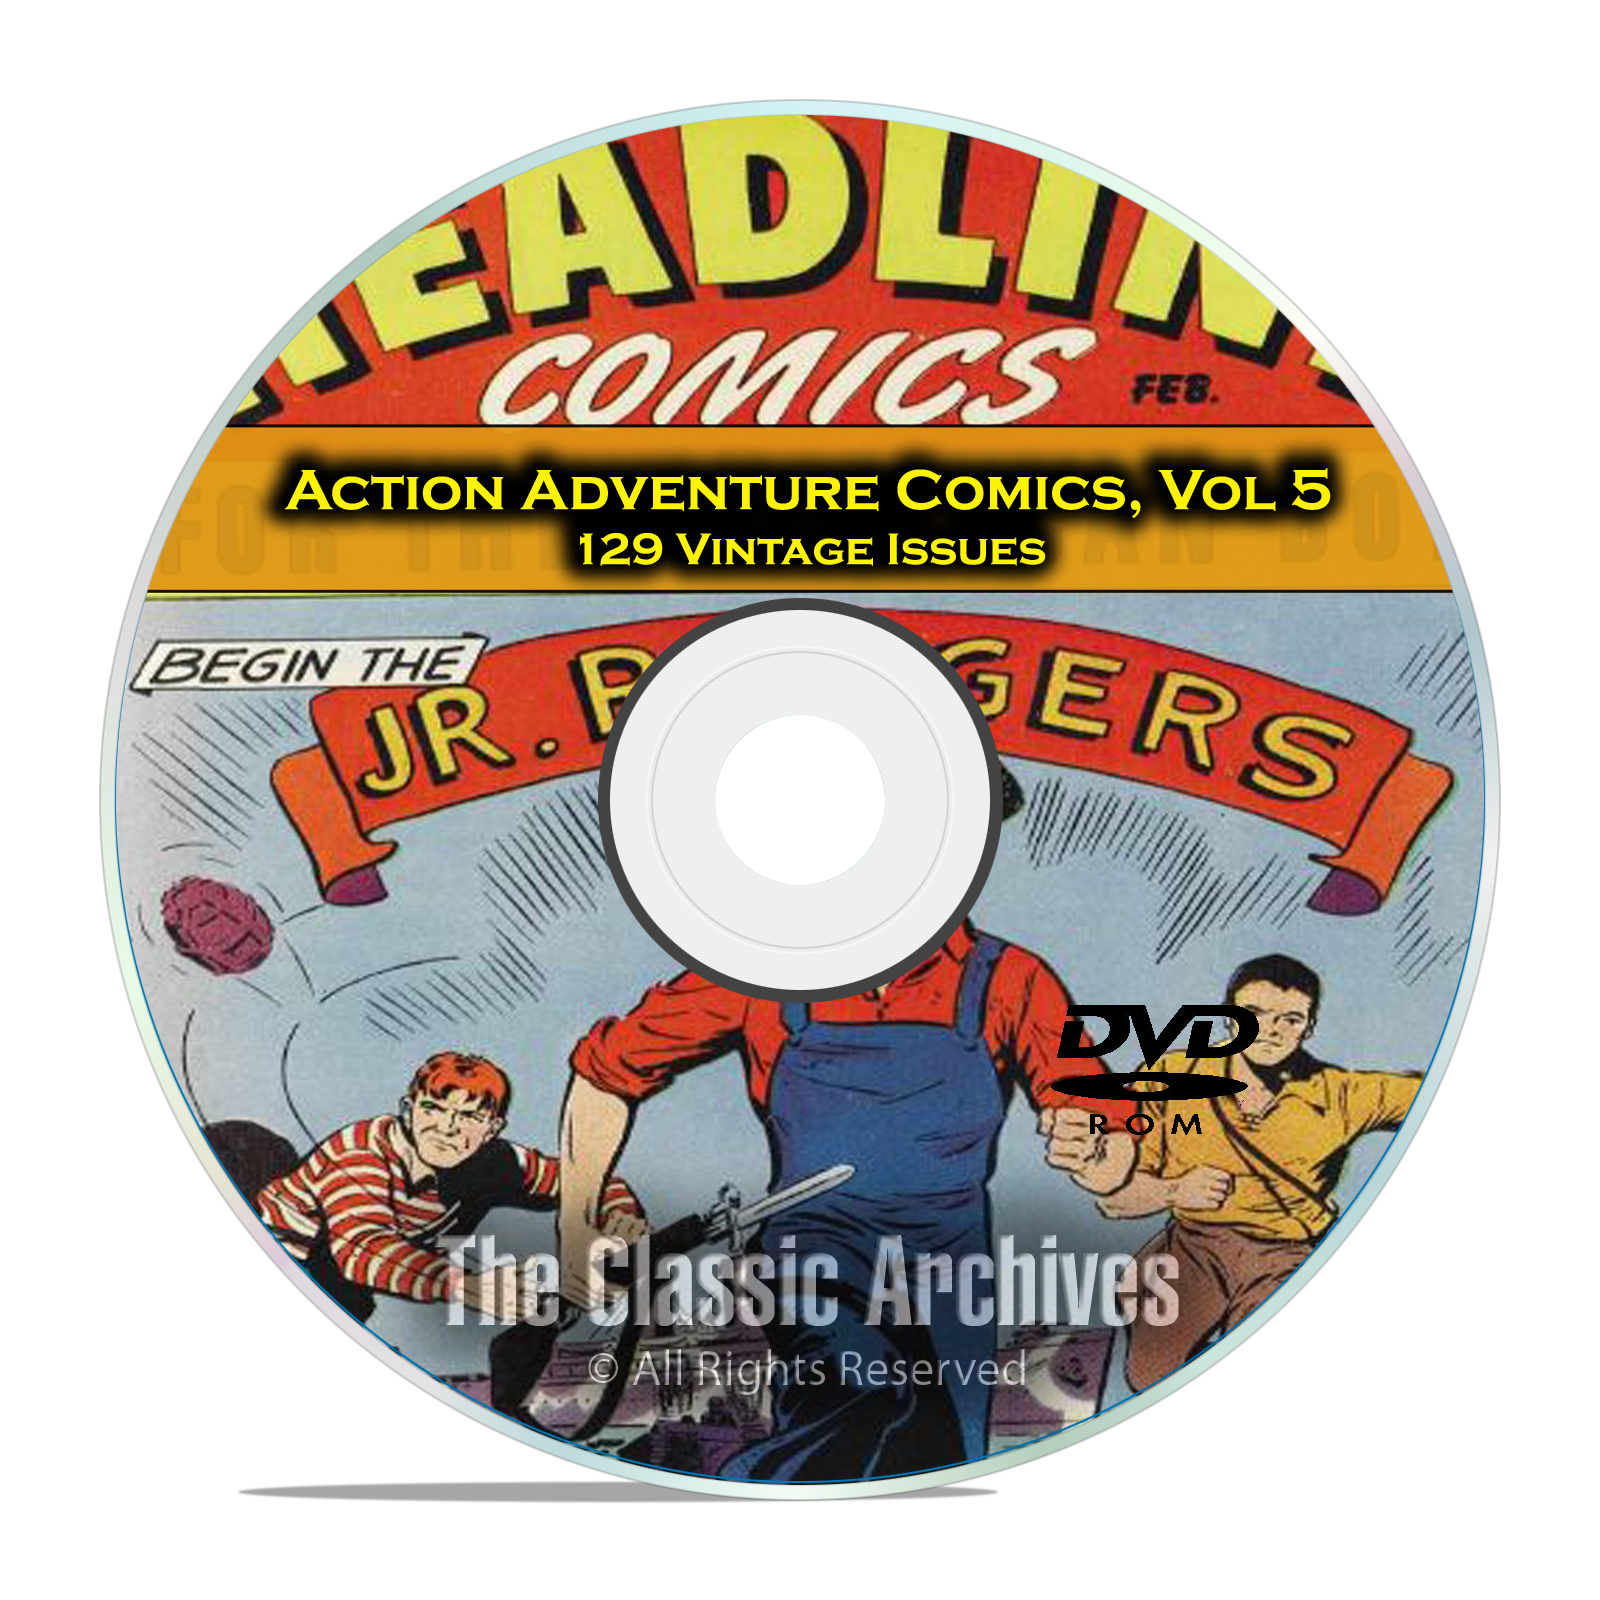 Action Adventure Comics, Vol 5, Headline, Treasure, Rocket, Golden Age DVD - Click Image to Close